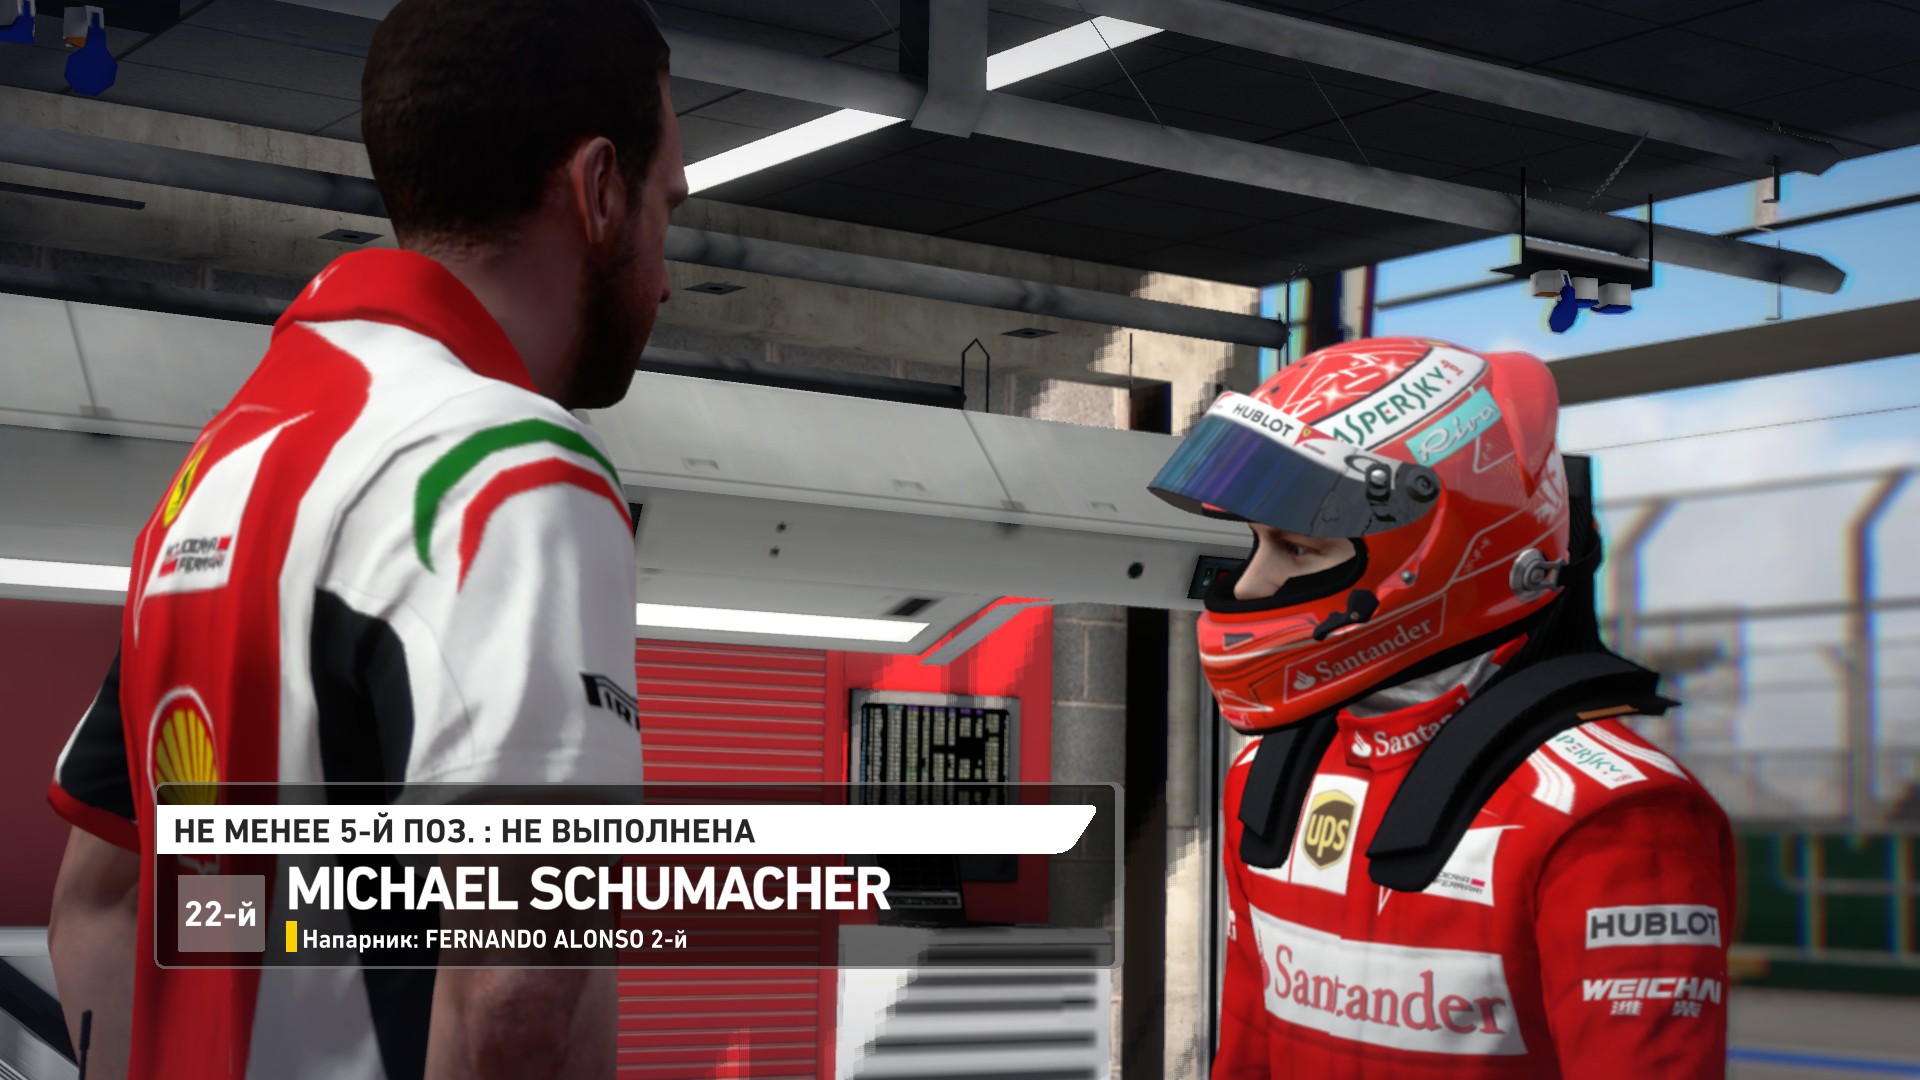 Michael Schumacher Helmet F1 2017 - 1920x1080 Wallpaper 